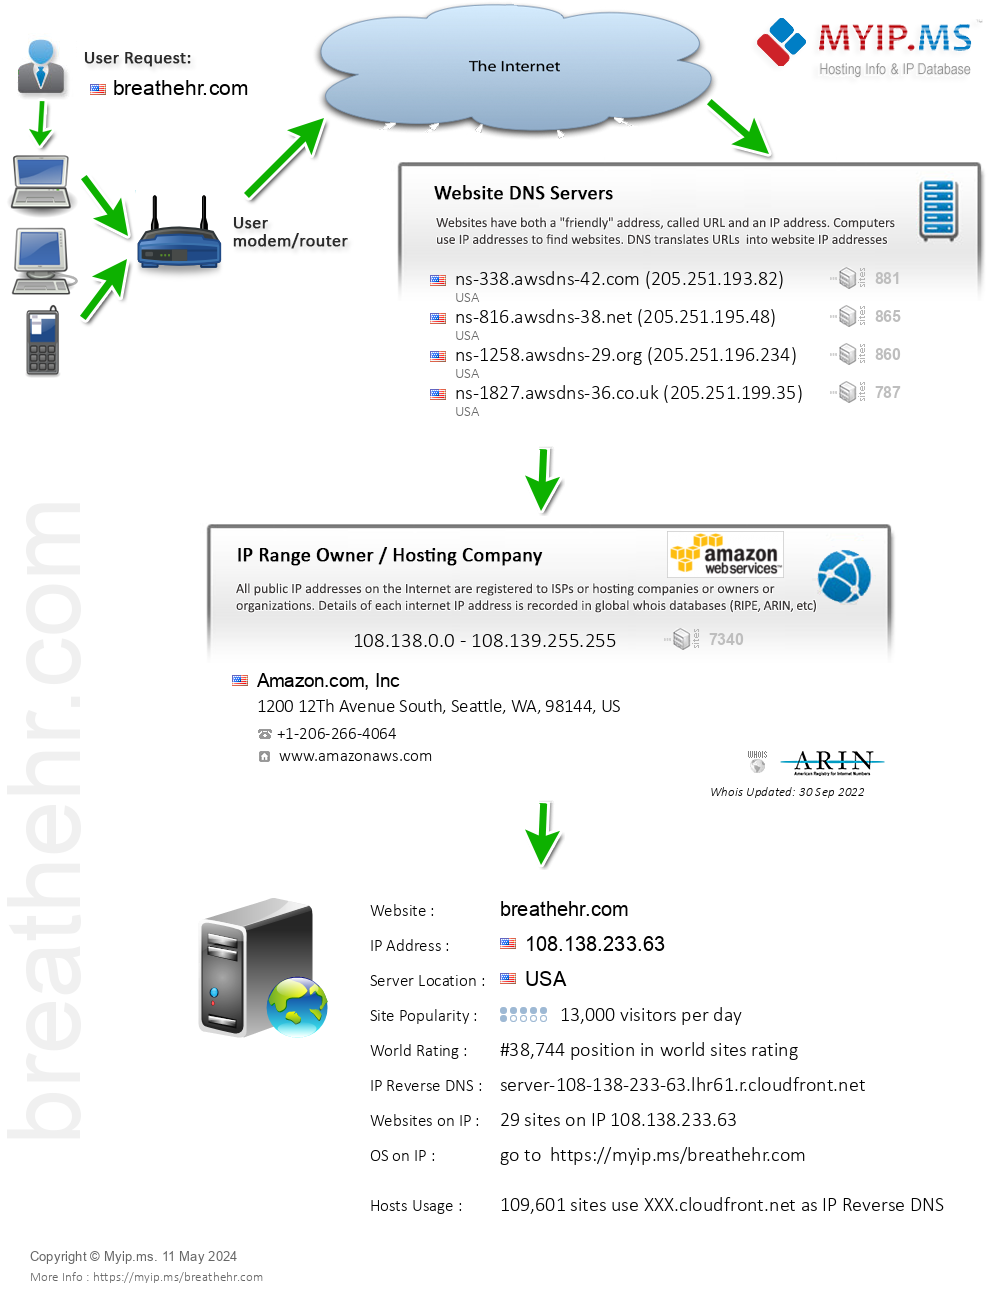 Breathehr.com - Website Hosting Visual IP Diagram